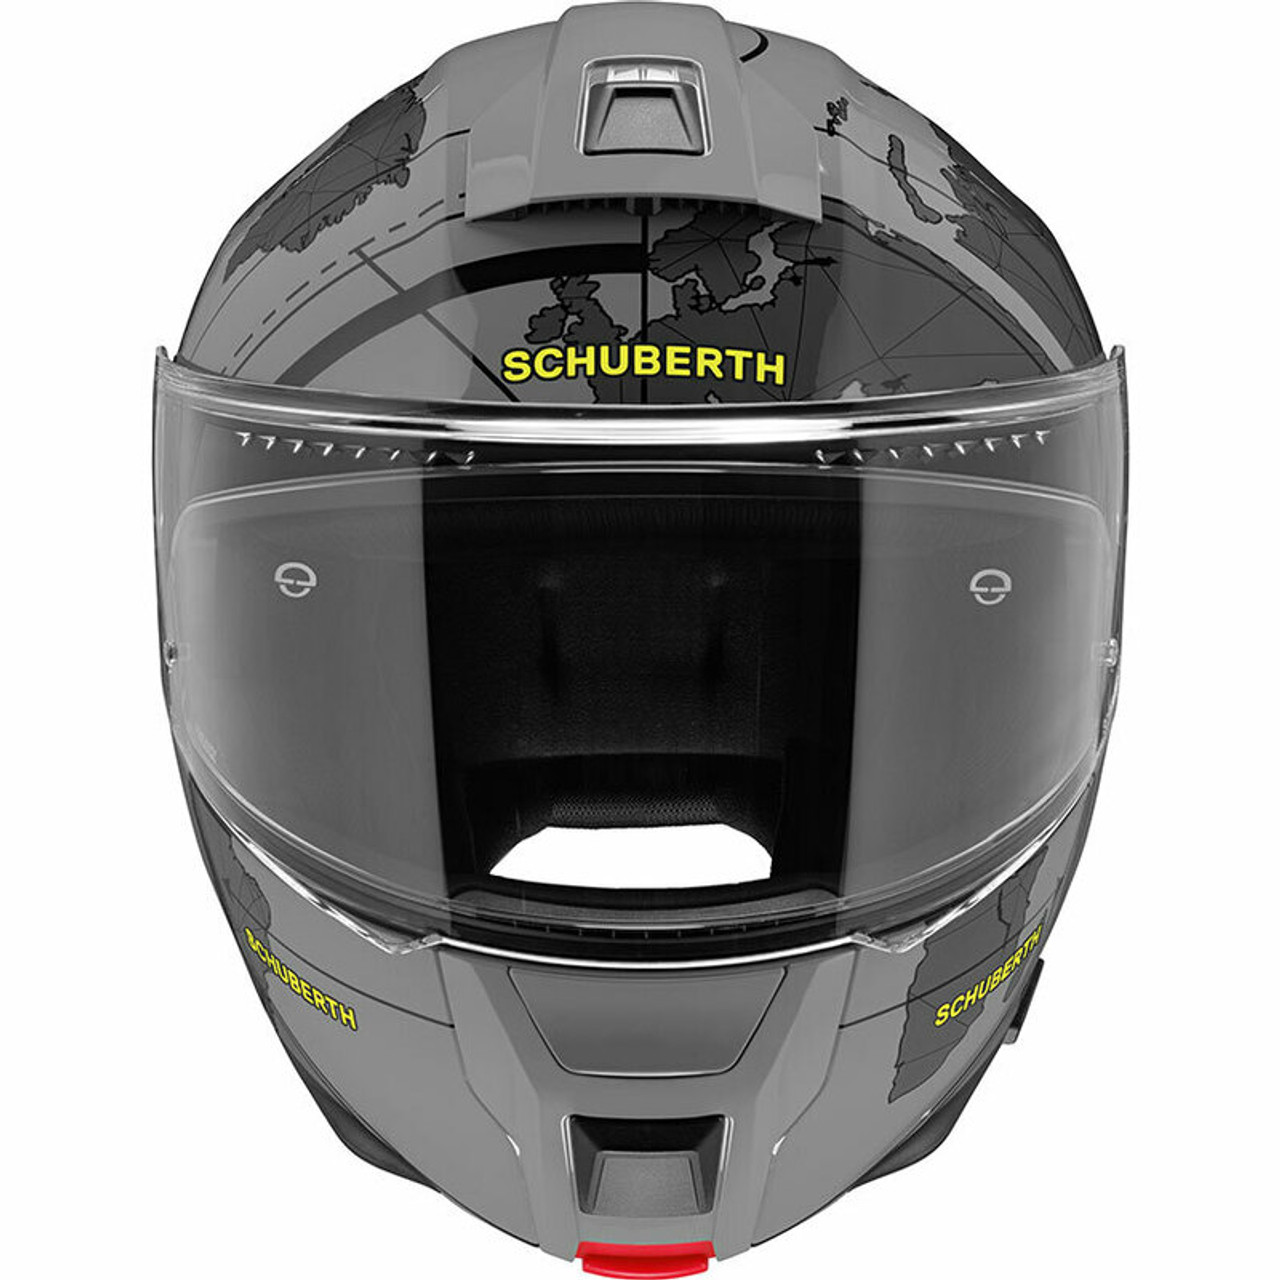 Schuberth C5 Modular Helmet Yellow Fluo